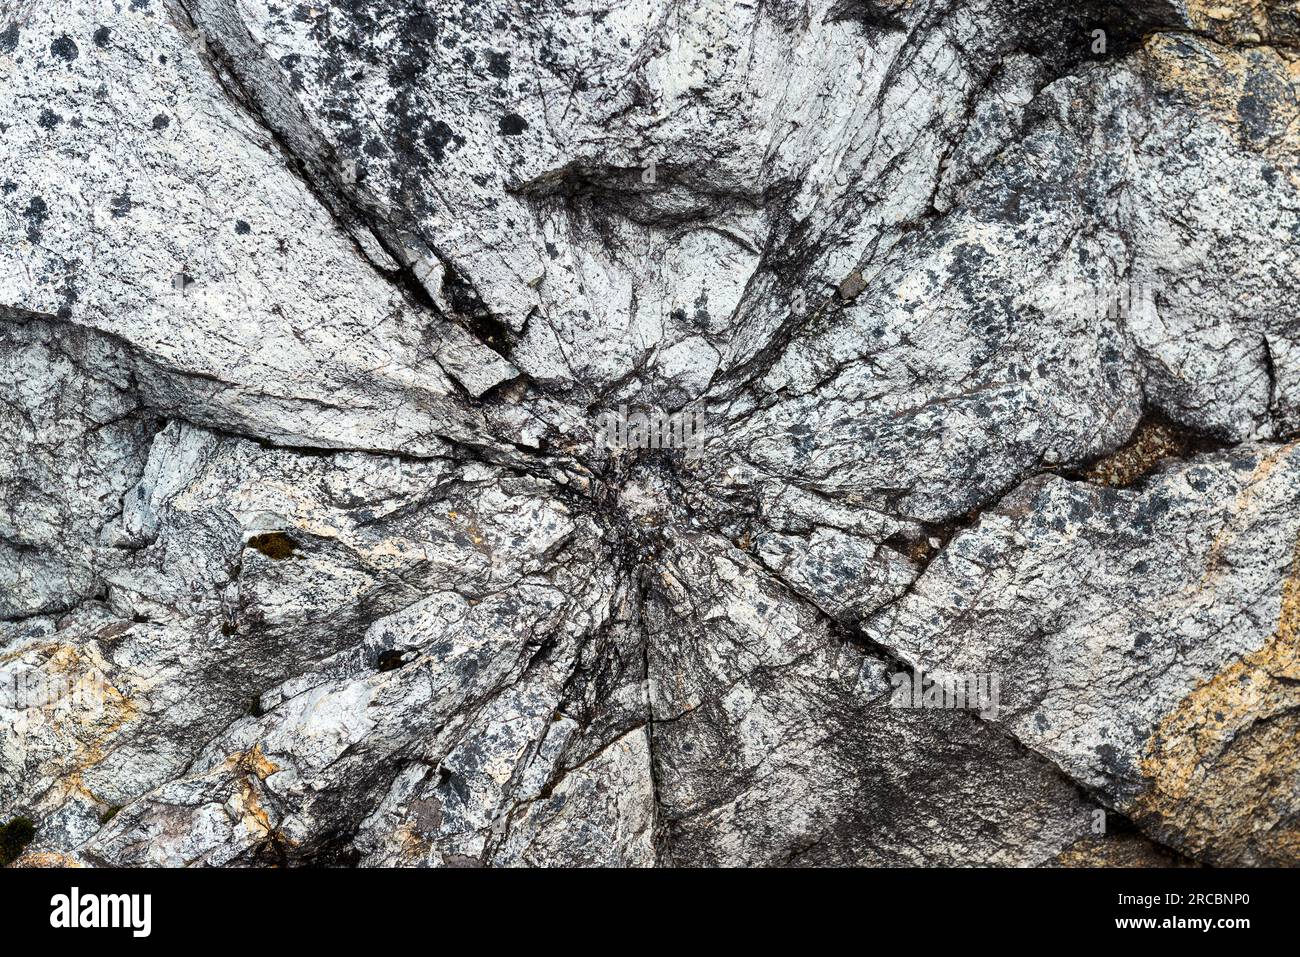 Meteorite impact in a rock along Garcia Moreno hiking trail, Cajas national park, Cuenca, Ecuador. Stock Photo